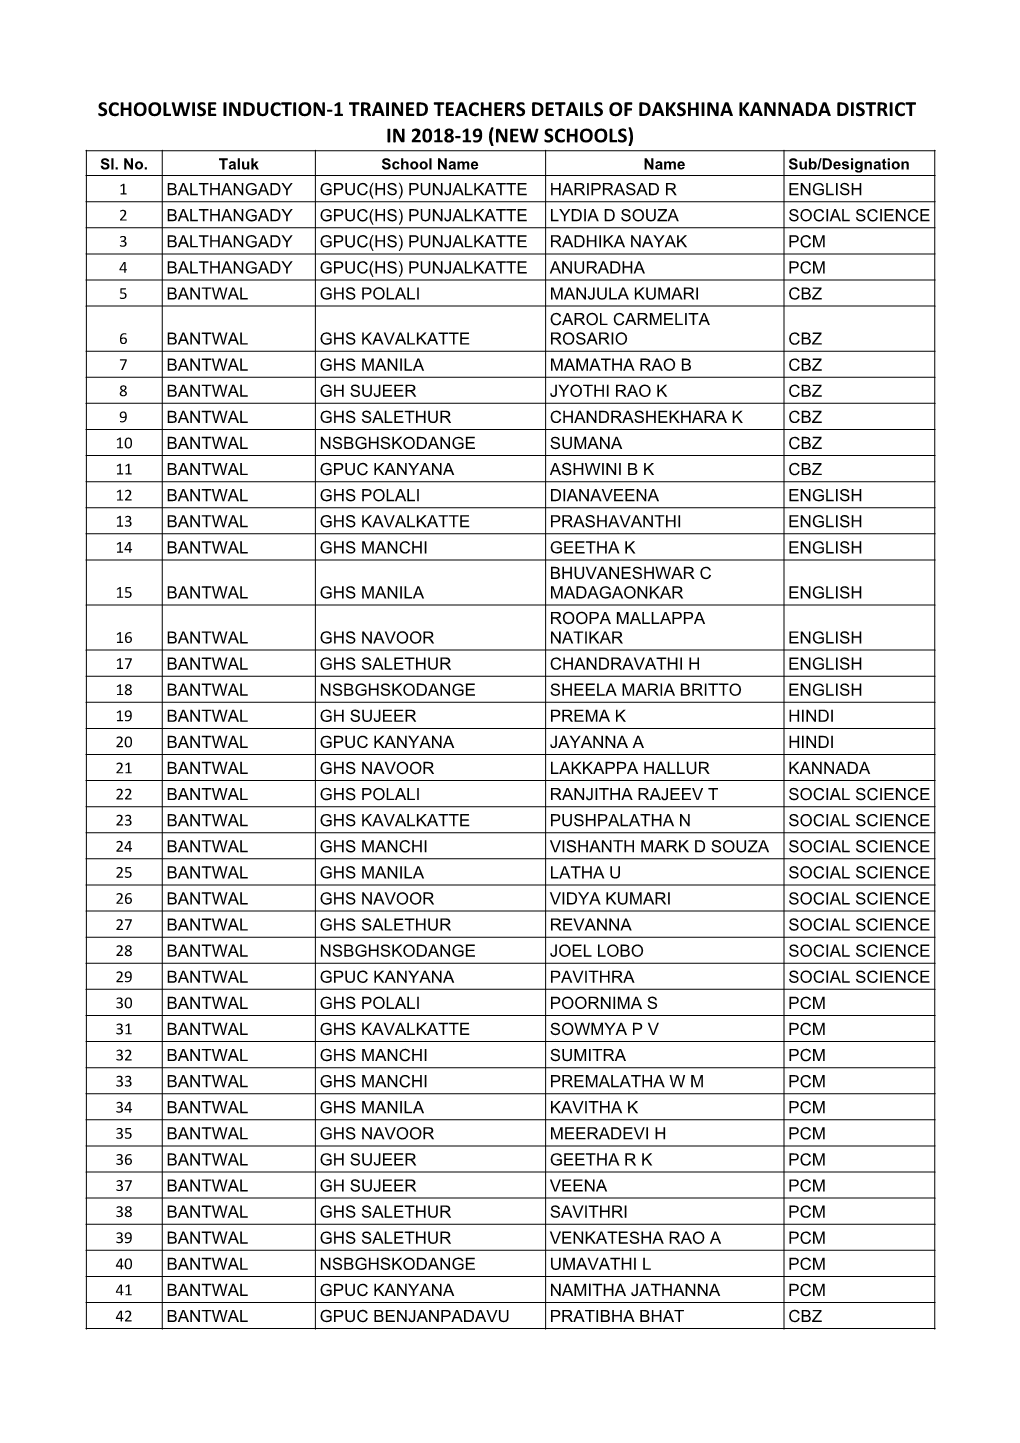 List of Trained Teachers Induction-1 Dakshina Kannada